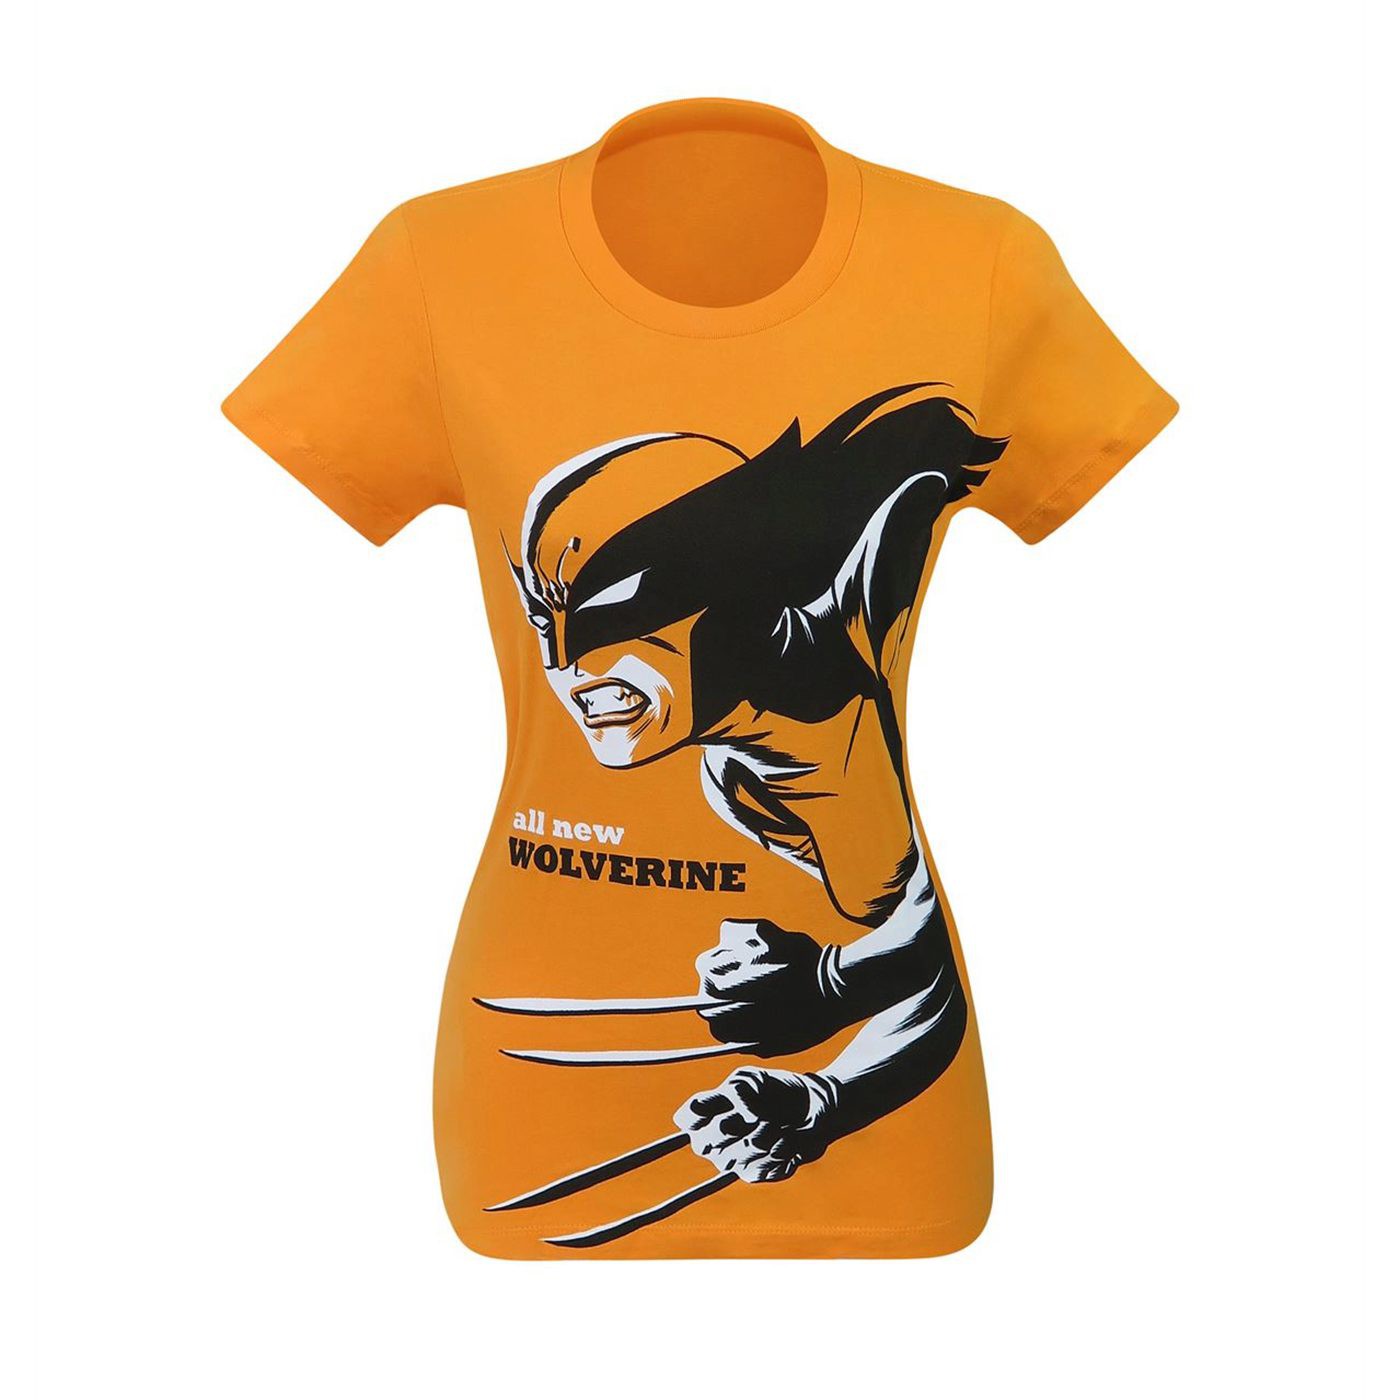 All New Wolverine X-23 Women's T-Shirt